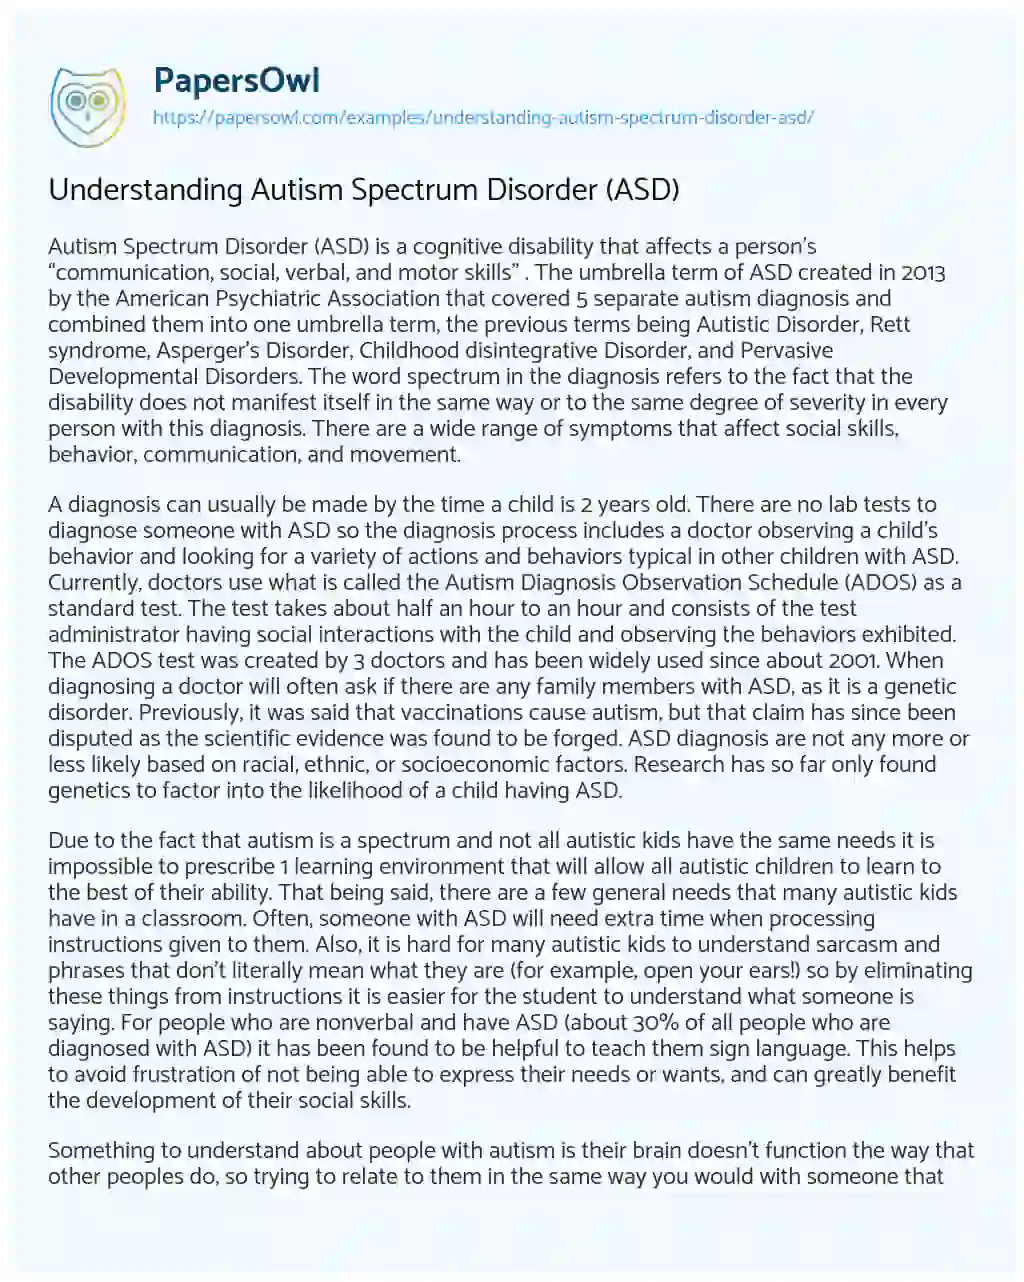 Essay on Understanding Autism Spectrum Disorder (ASD)